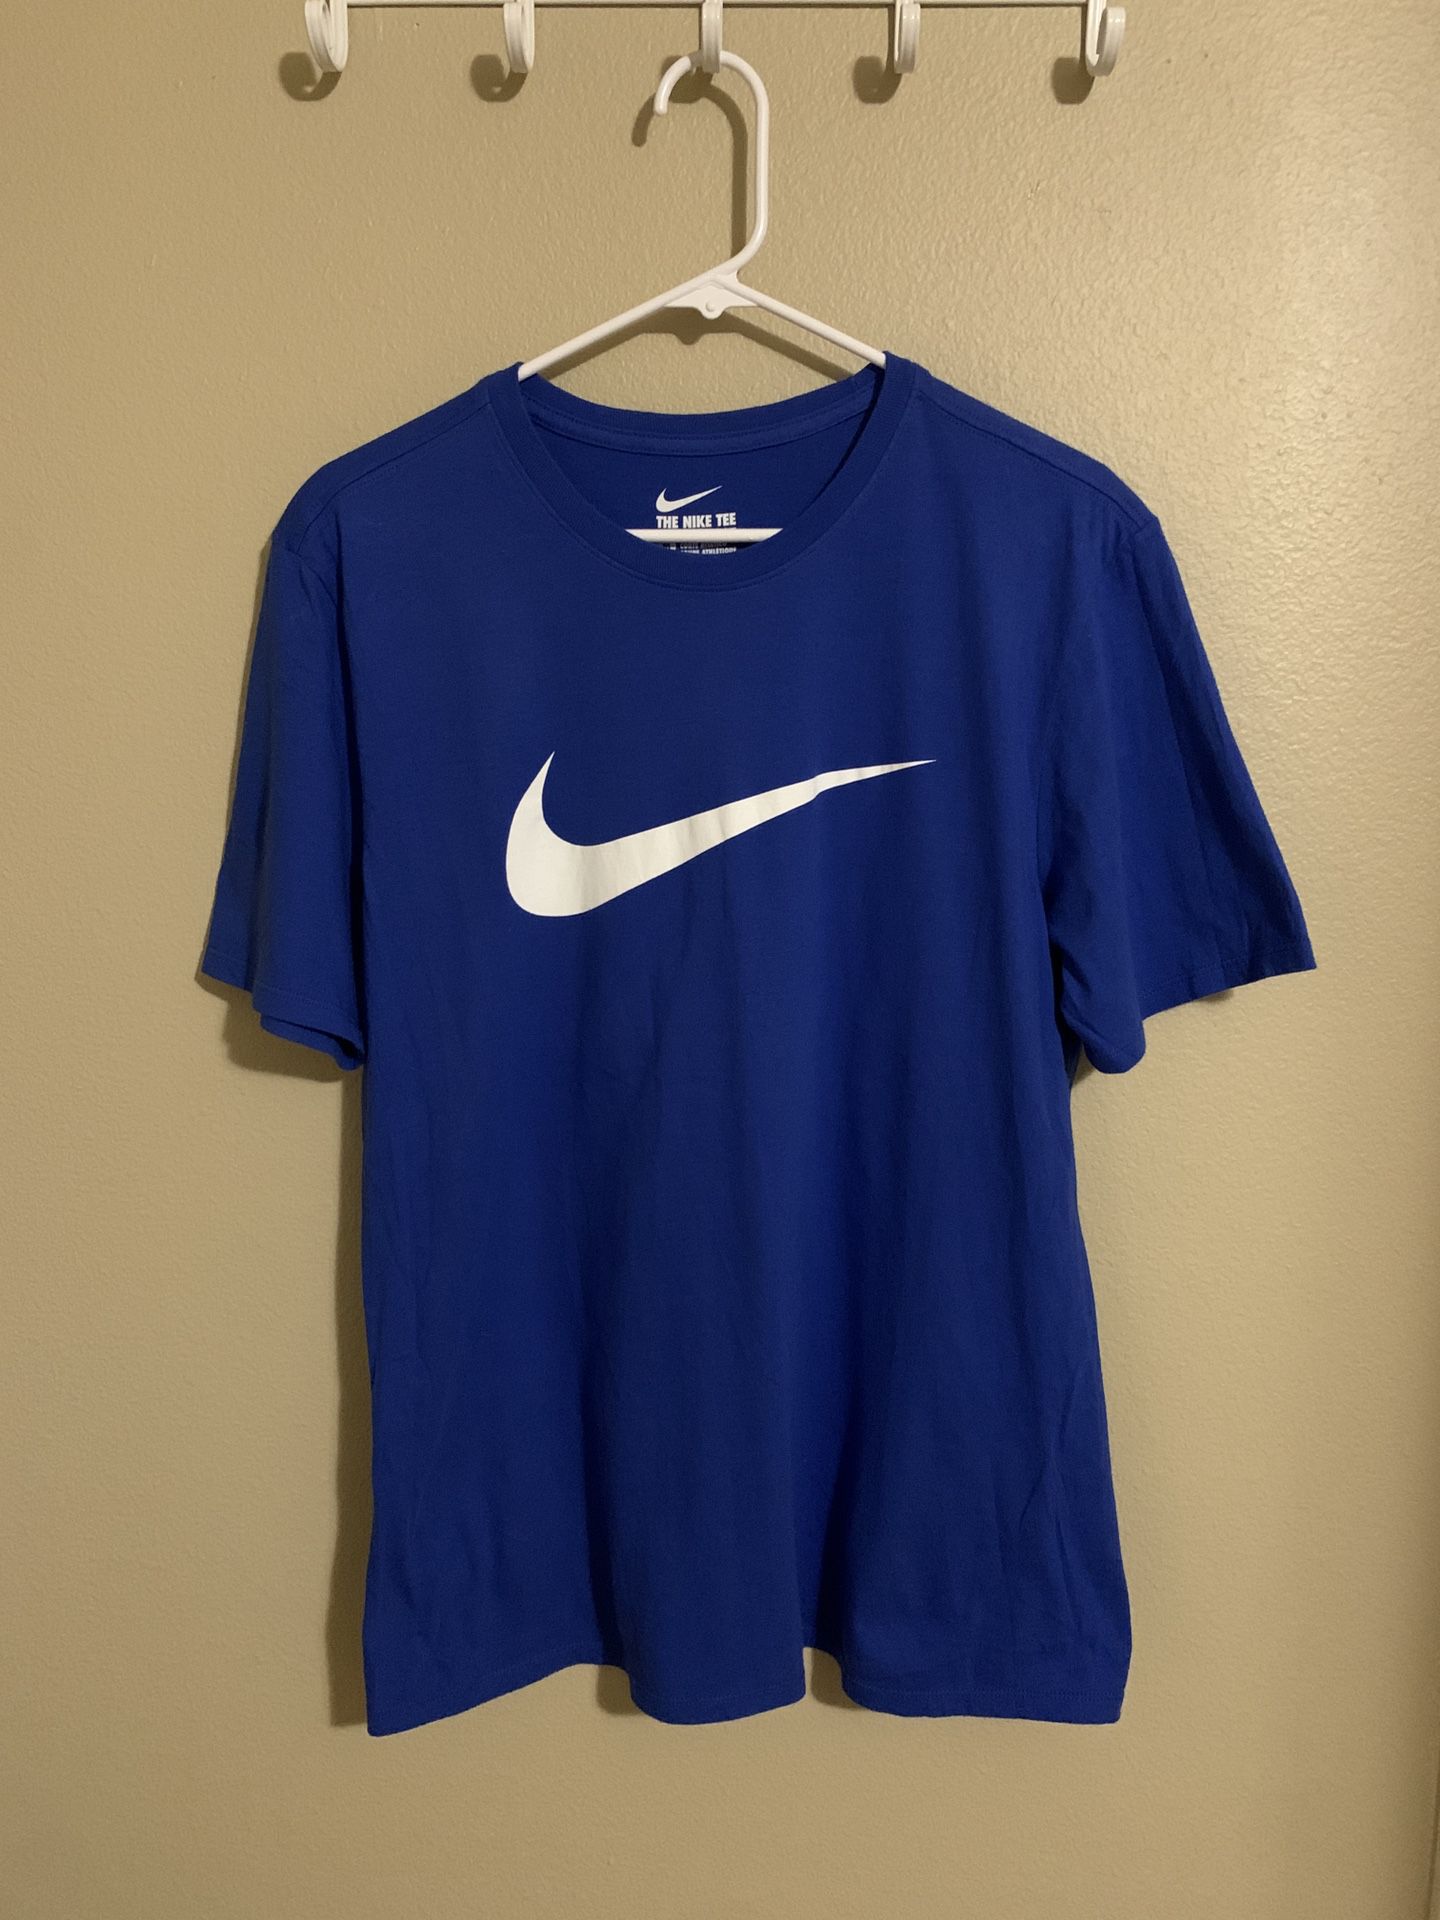 Men Nike Swoosh Blue Shirt Cotton Medium. Used Good Condition.